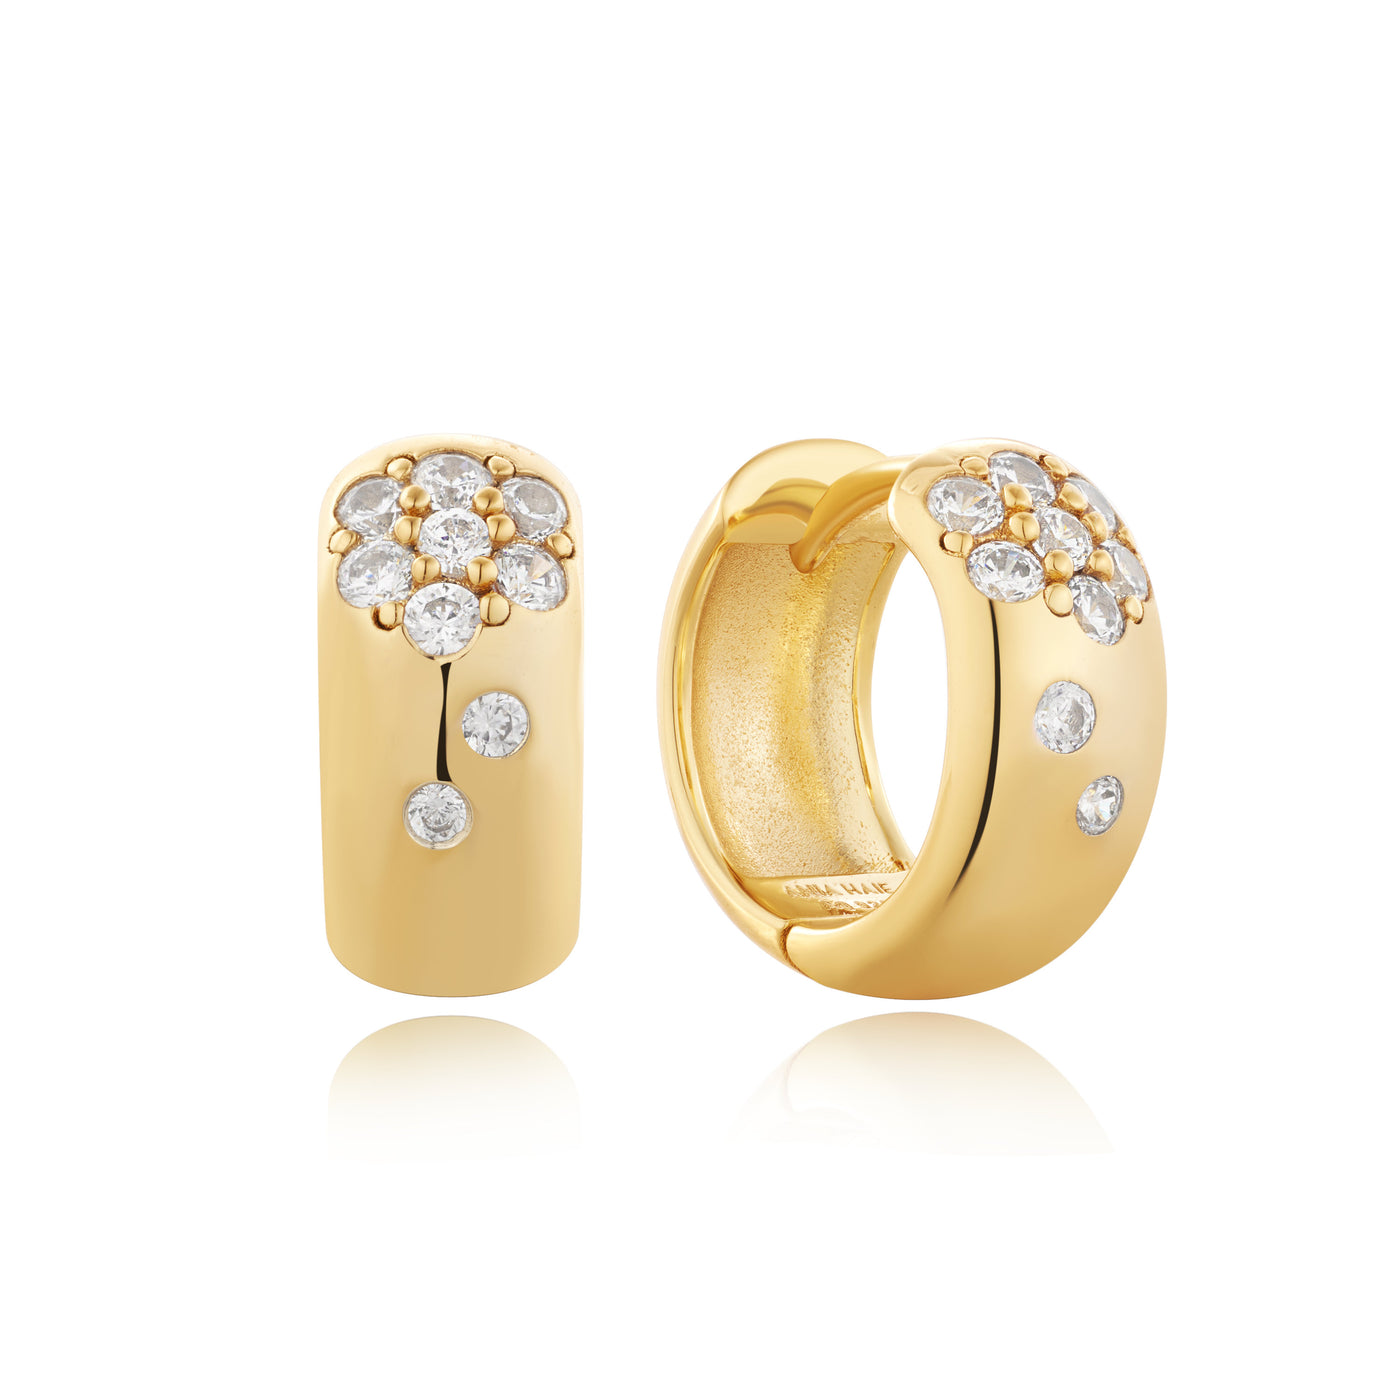 Ania Haie Sterling Silver/ Gold Huggie Earrings E054-05G